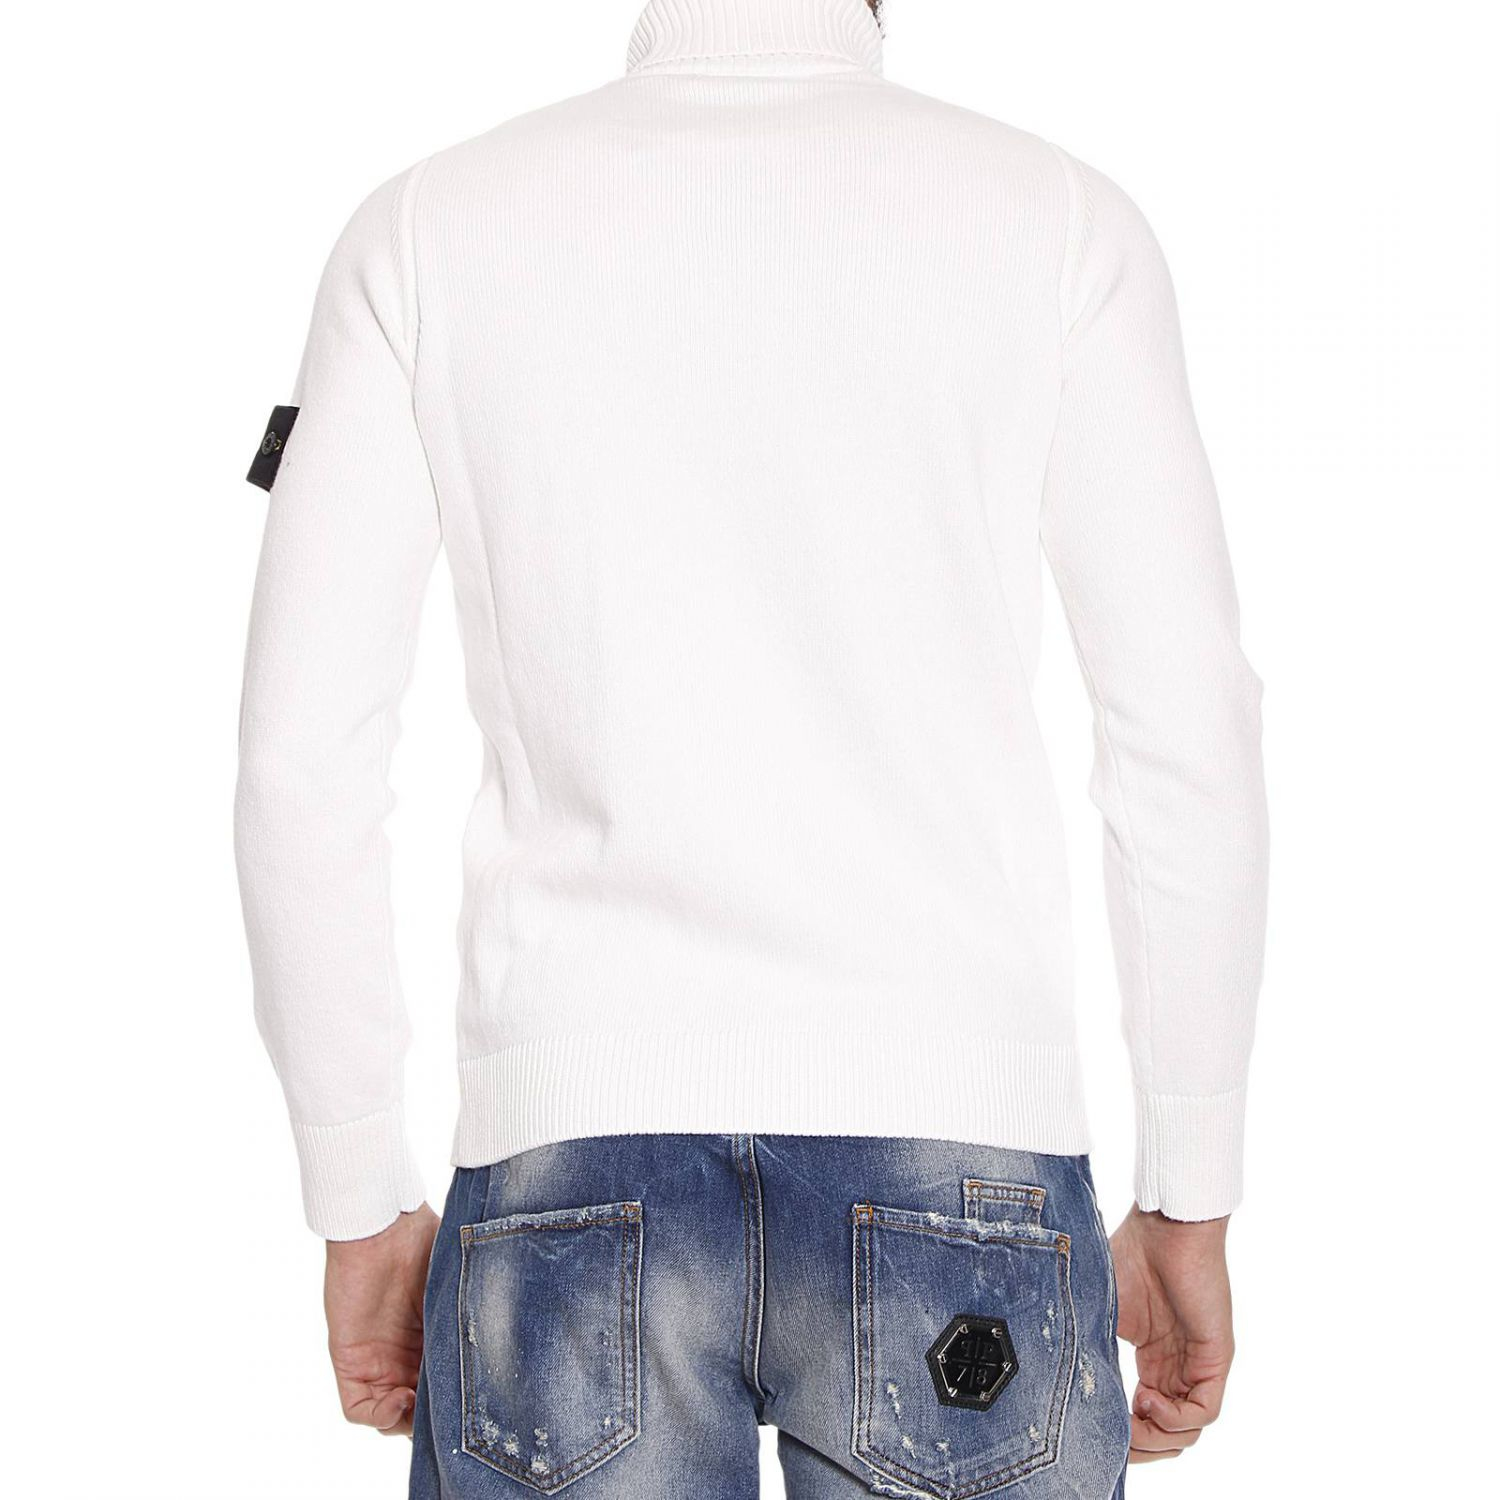 Stone island Sweater Winter Cotton Turtleneck in White for Men | Lyst